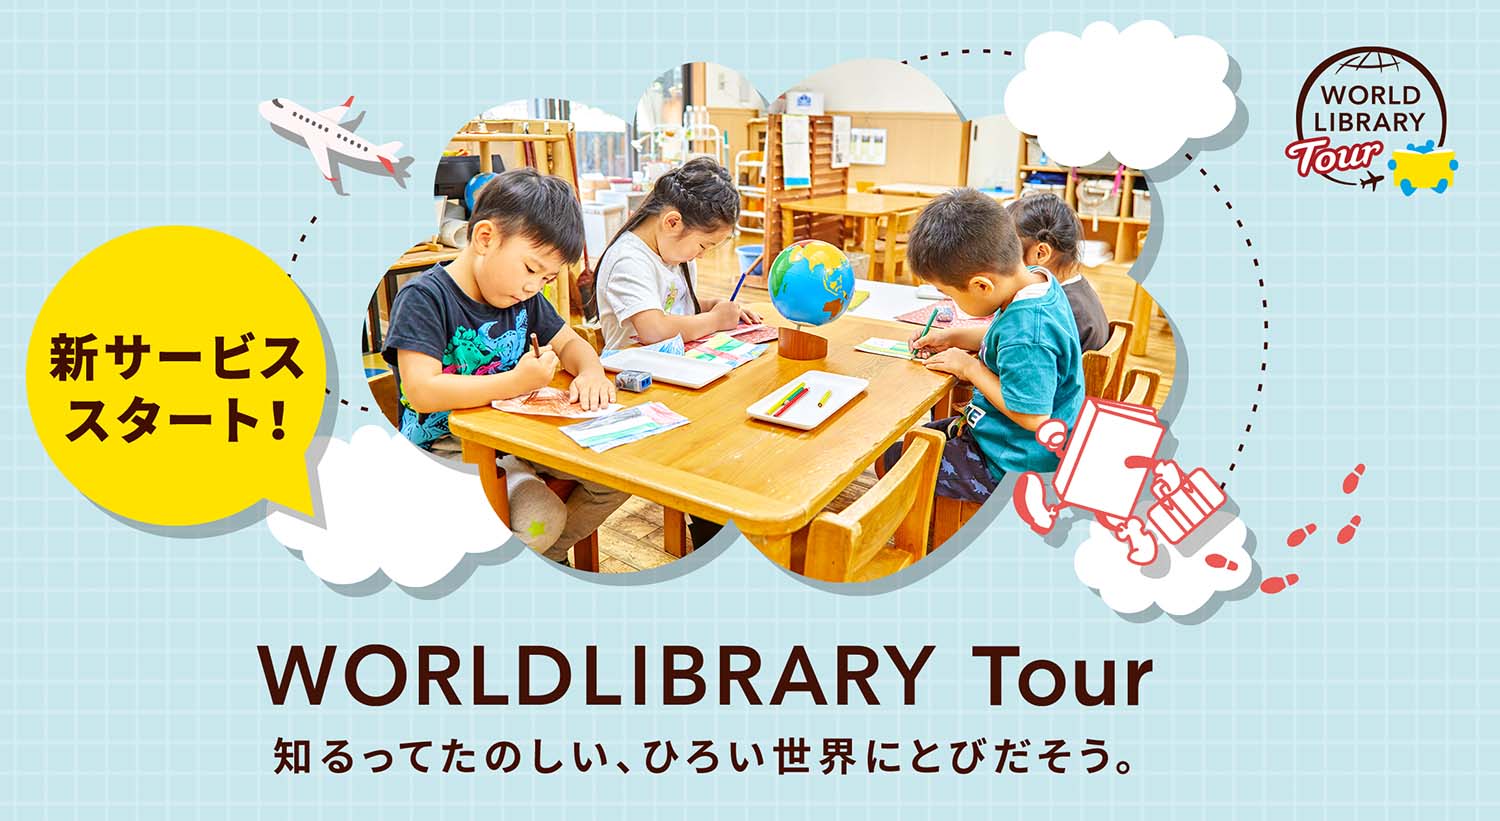 WORLDLIBRARY Tour